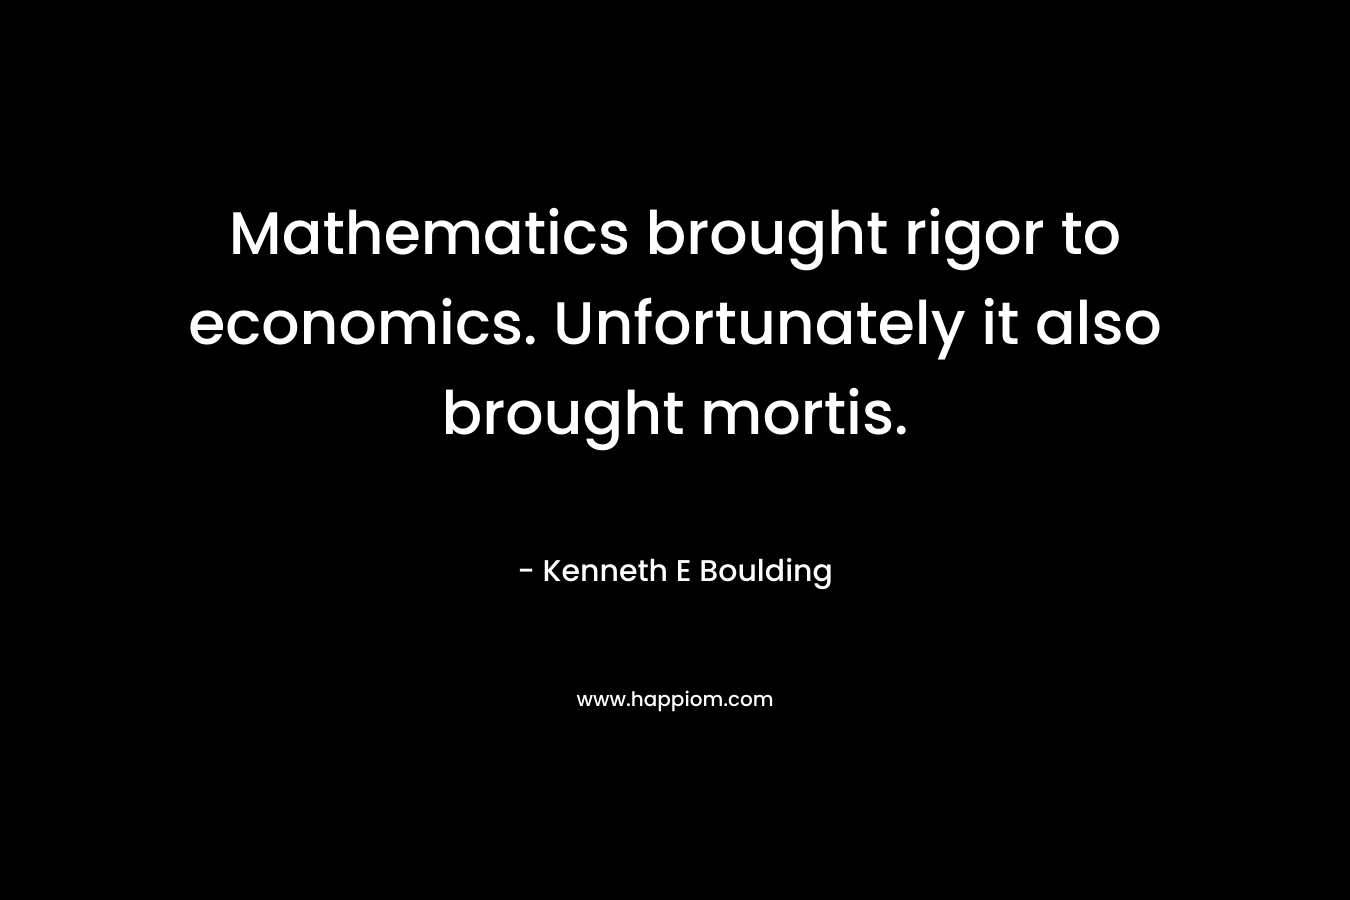 Mathematics brought rigor to economics. Unfortunately it also brought mortis.